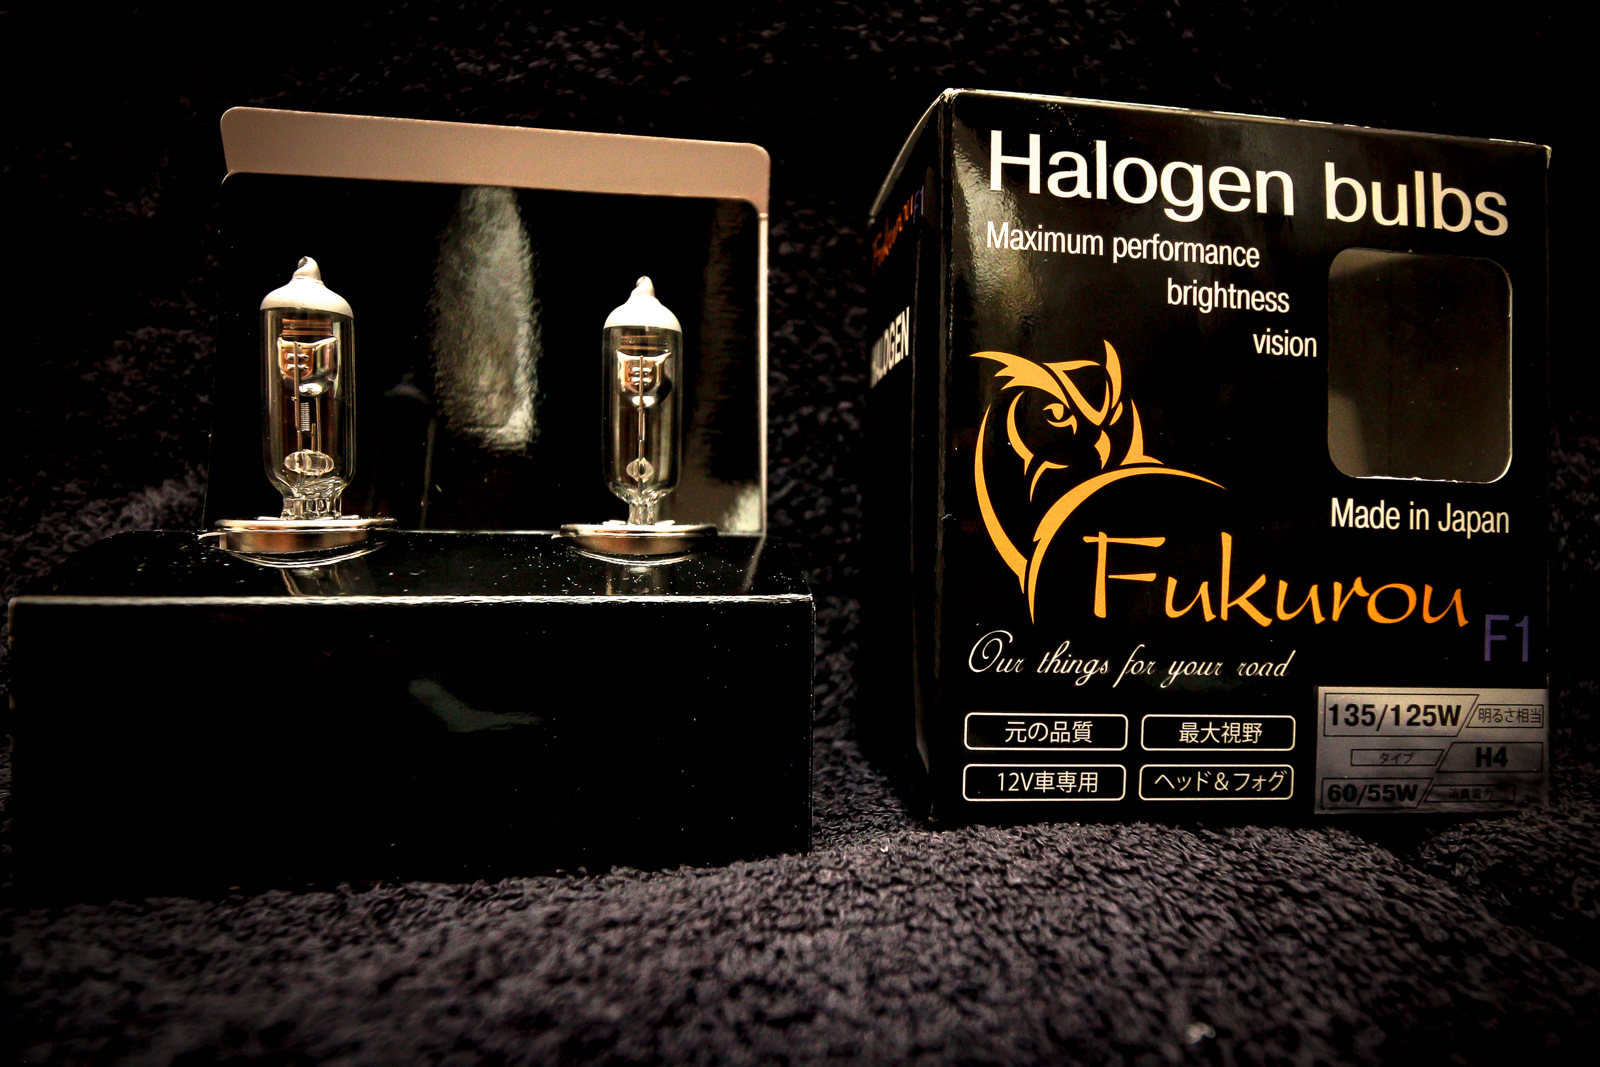 Fukurou h4 12v. Лампы Fukurou f1. Fukurou f1 h7. Галогеновые лампы Fukurou f1 h7. Лампочки Fukurou f1 h4.